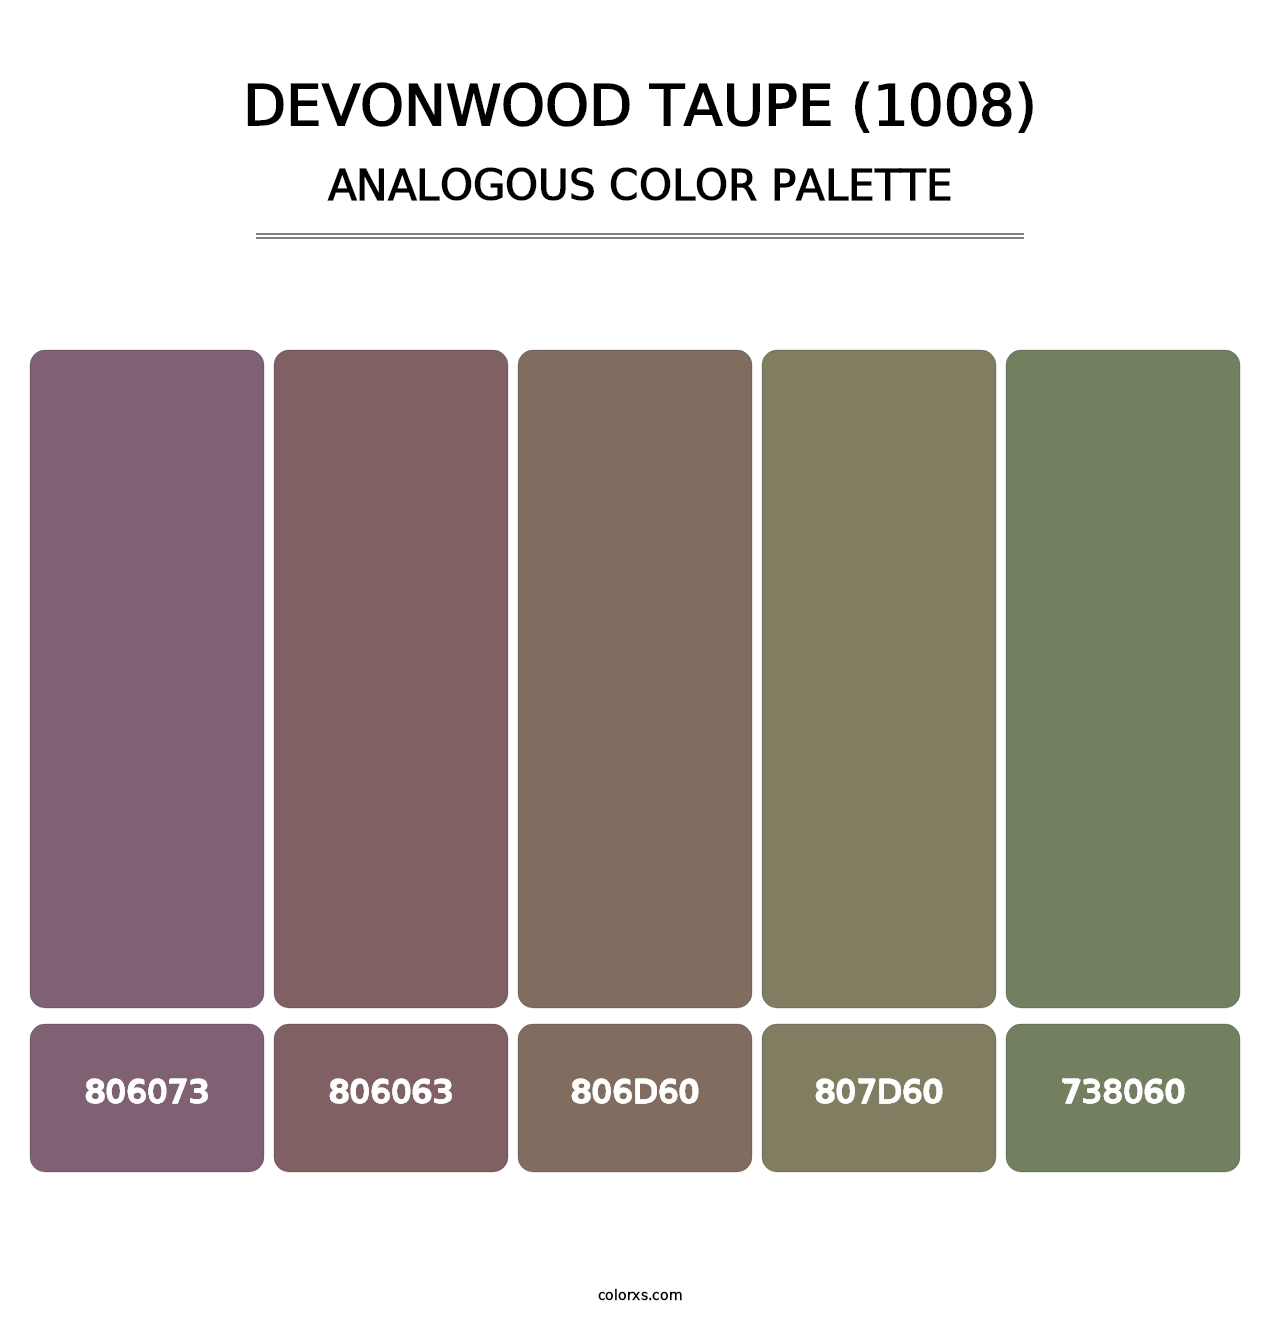 Devonwood Taupe (1008) - Analogous Color Palette